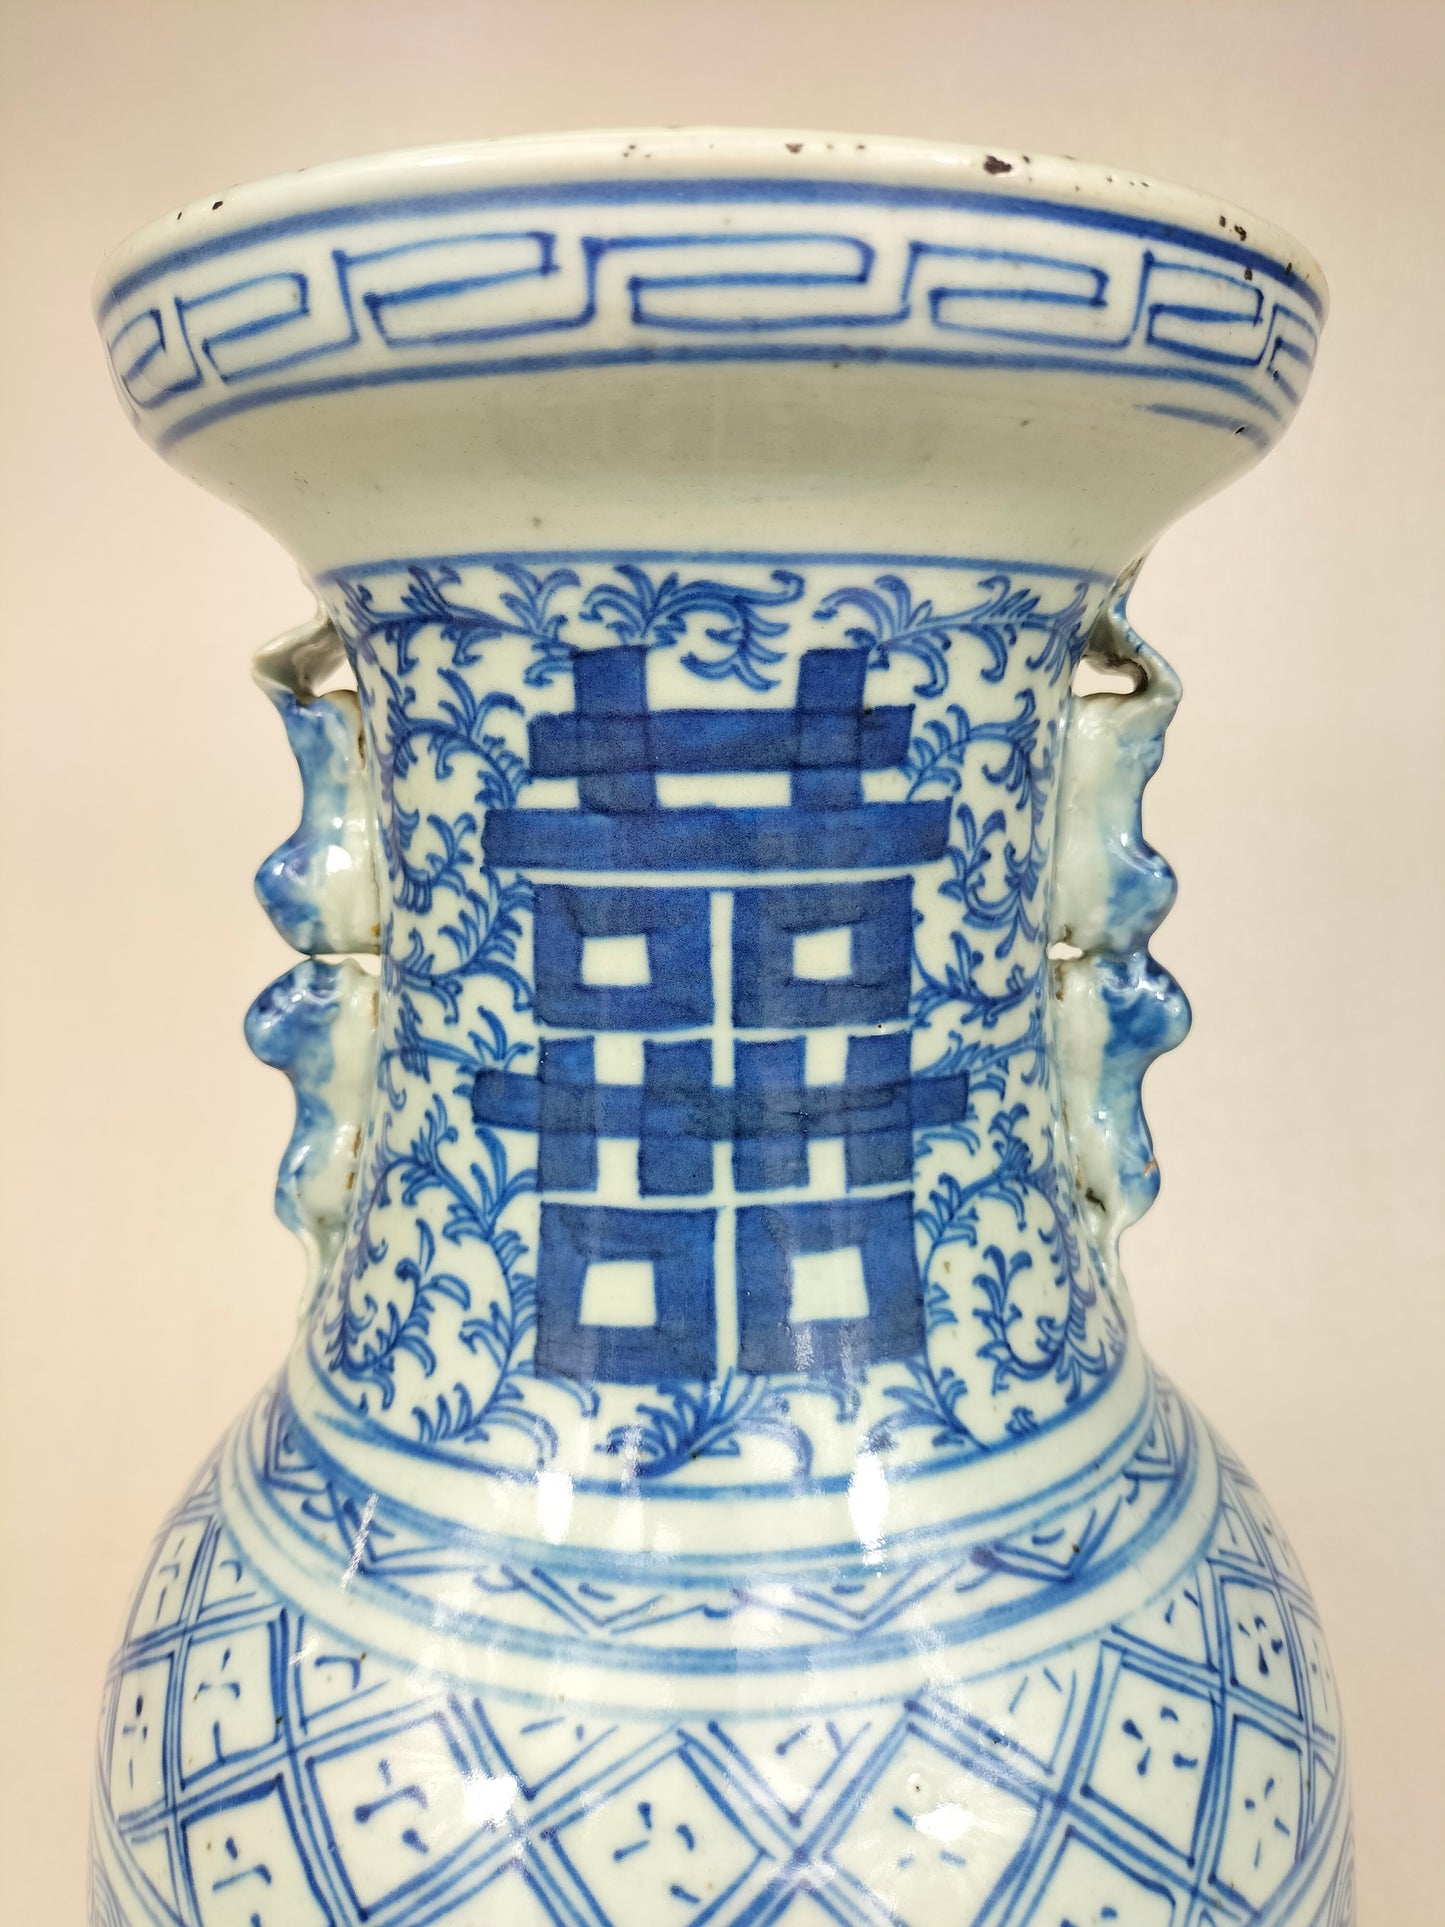 Antigo vaso de casamento chinês duplo felicidade / Dinastia Qing - século XIX